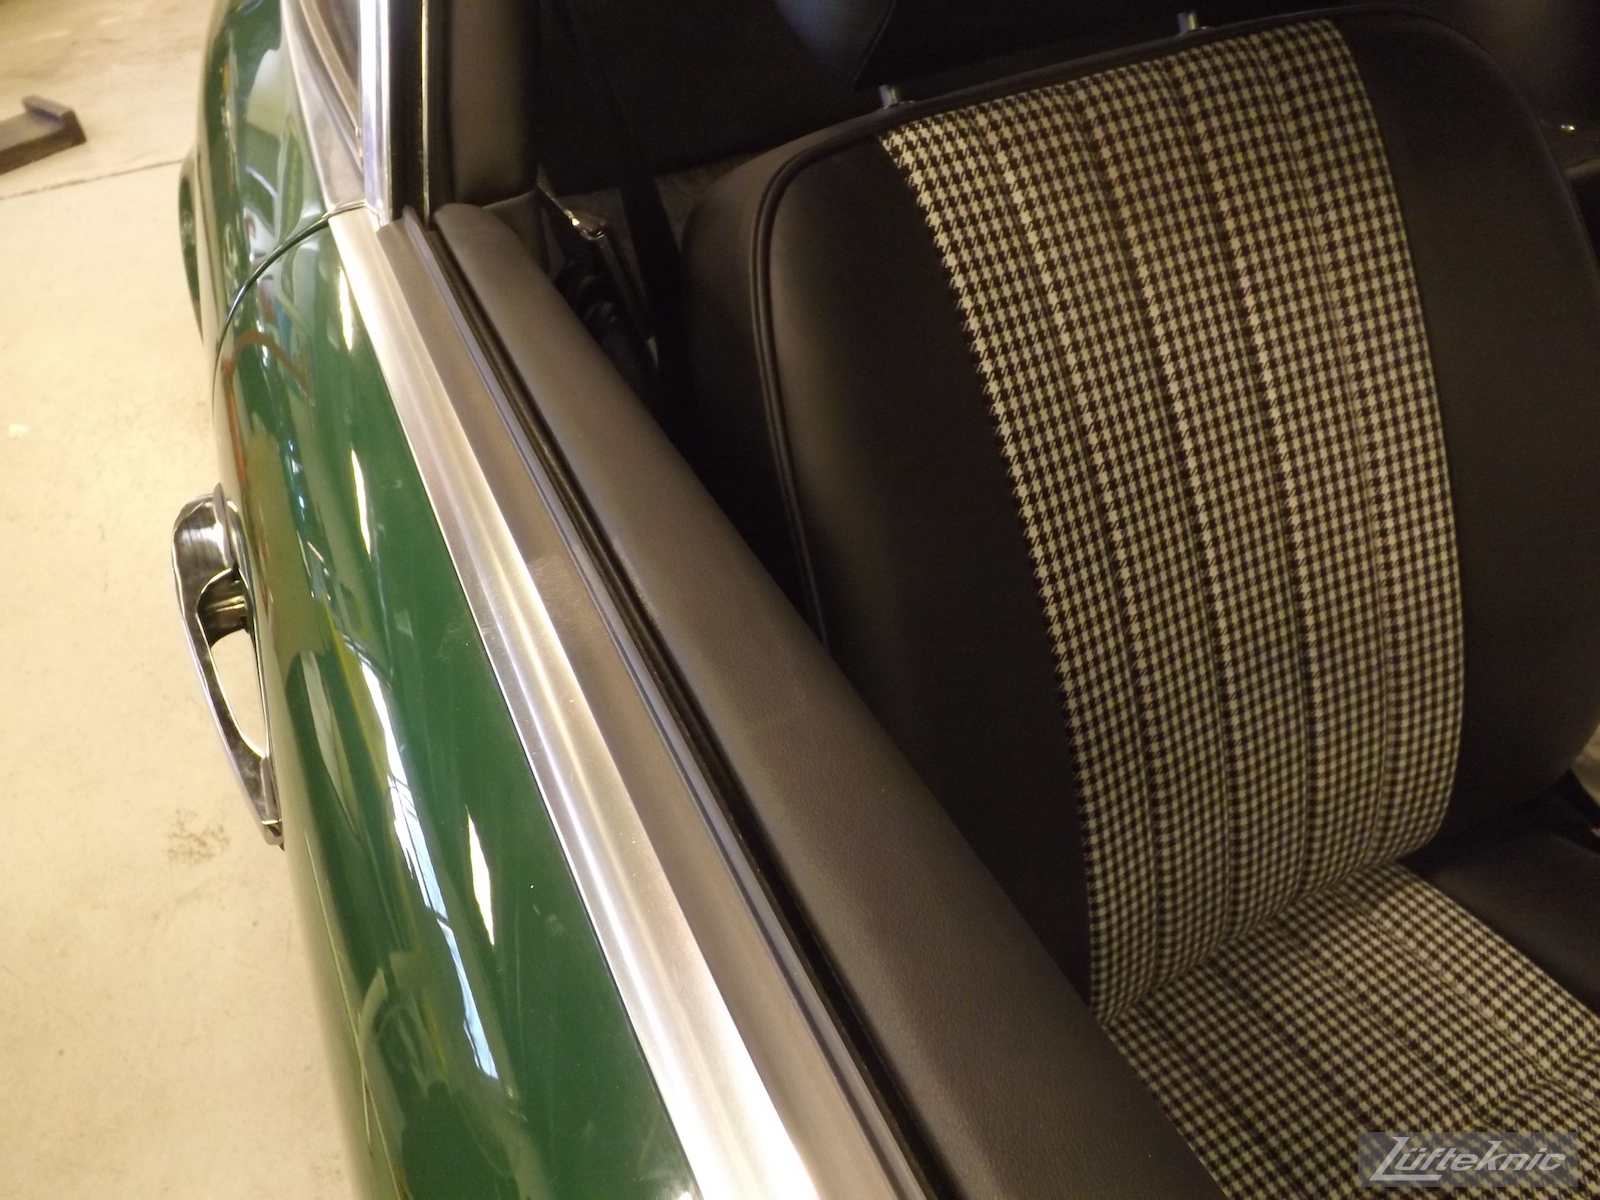 Door and interior details of an Irish Green Porsche 912 undergoing restoration at Lufteknic.